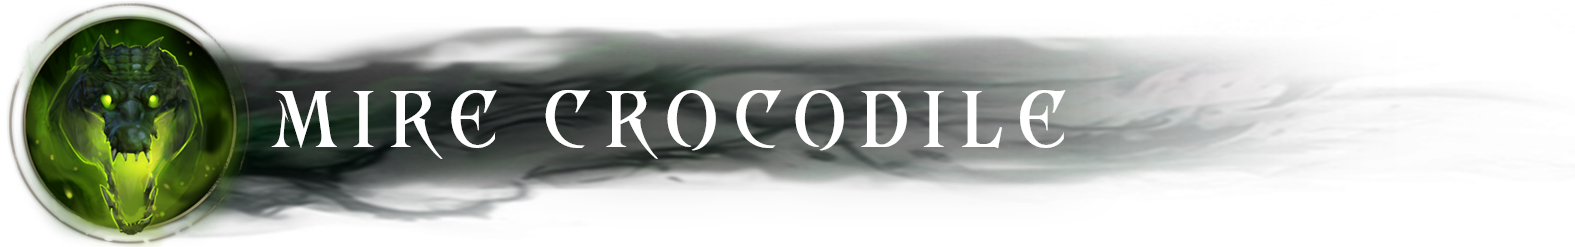 Banner MireCrocodile